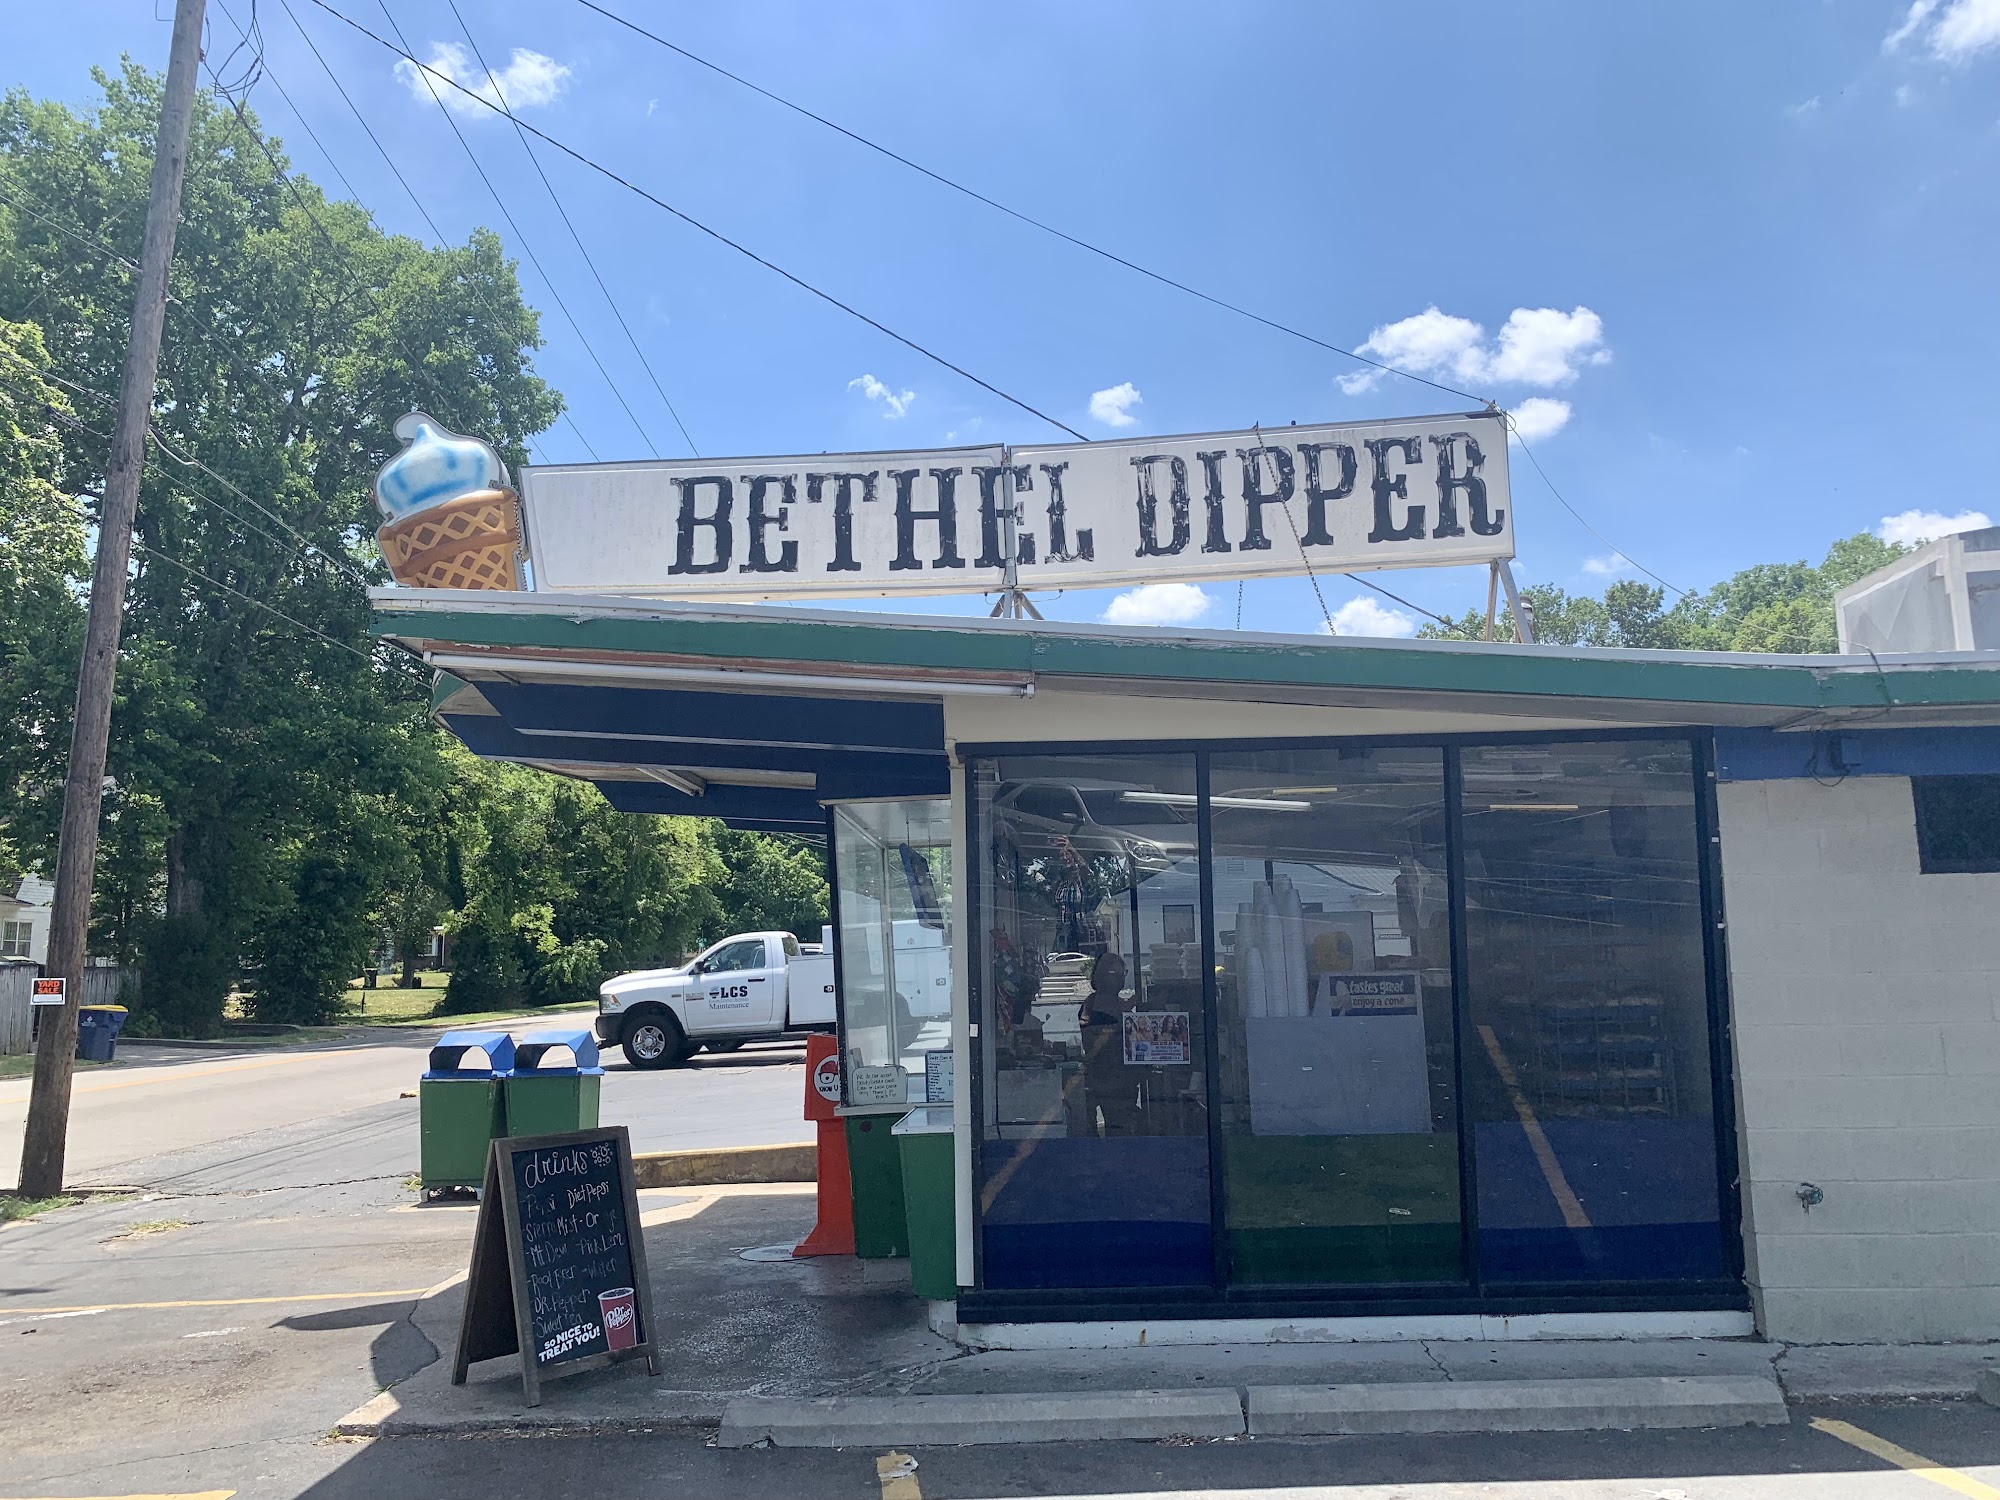 Bethel Dipper